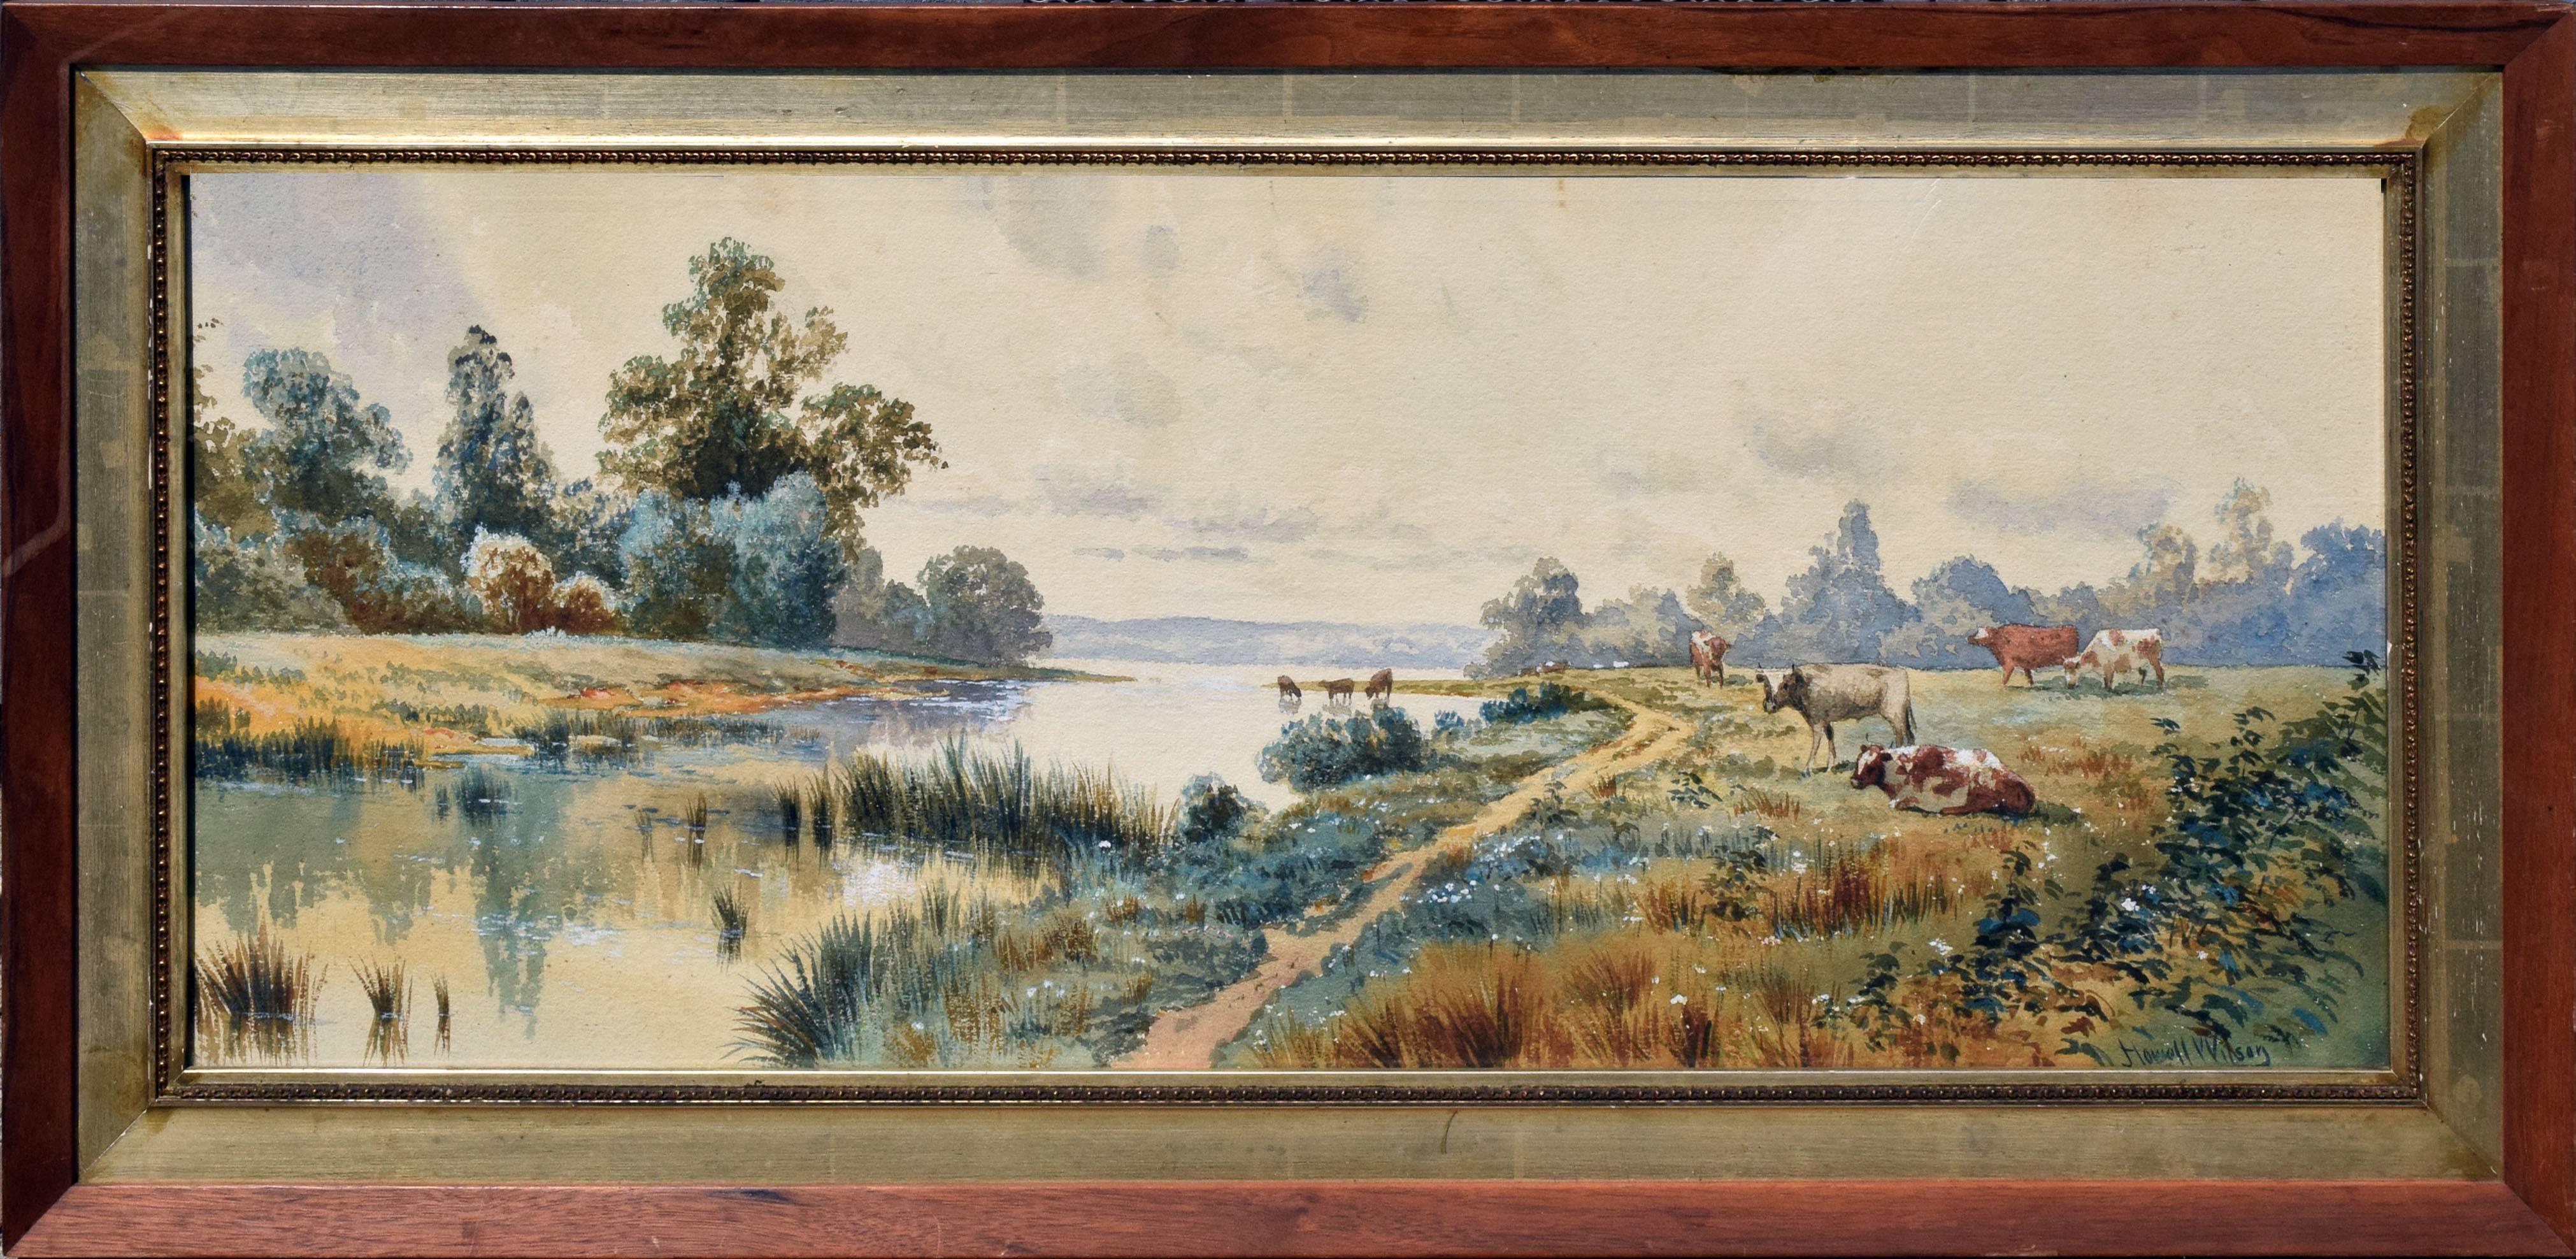 Late 19th Century Pennsylvania Pasture & Cows - Horizontal Landscape 